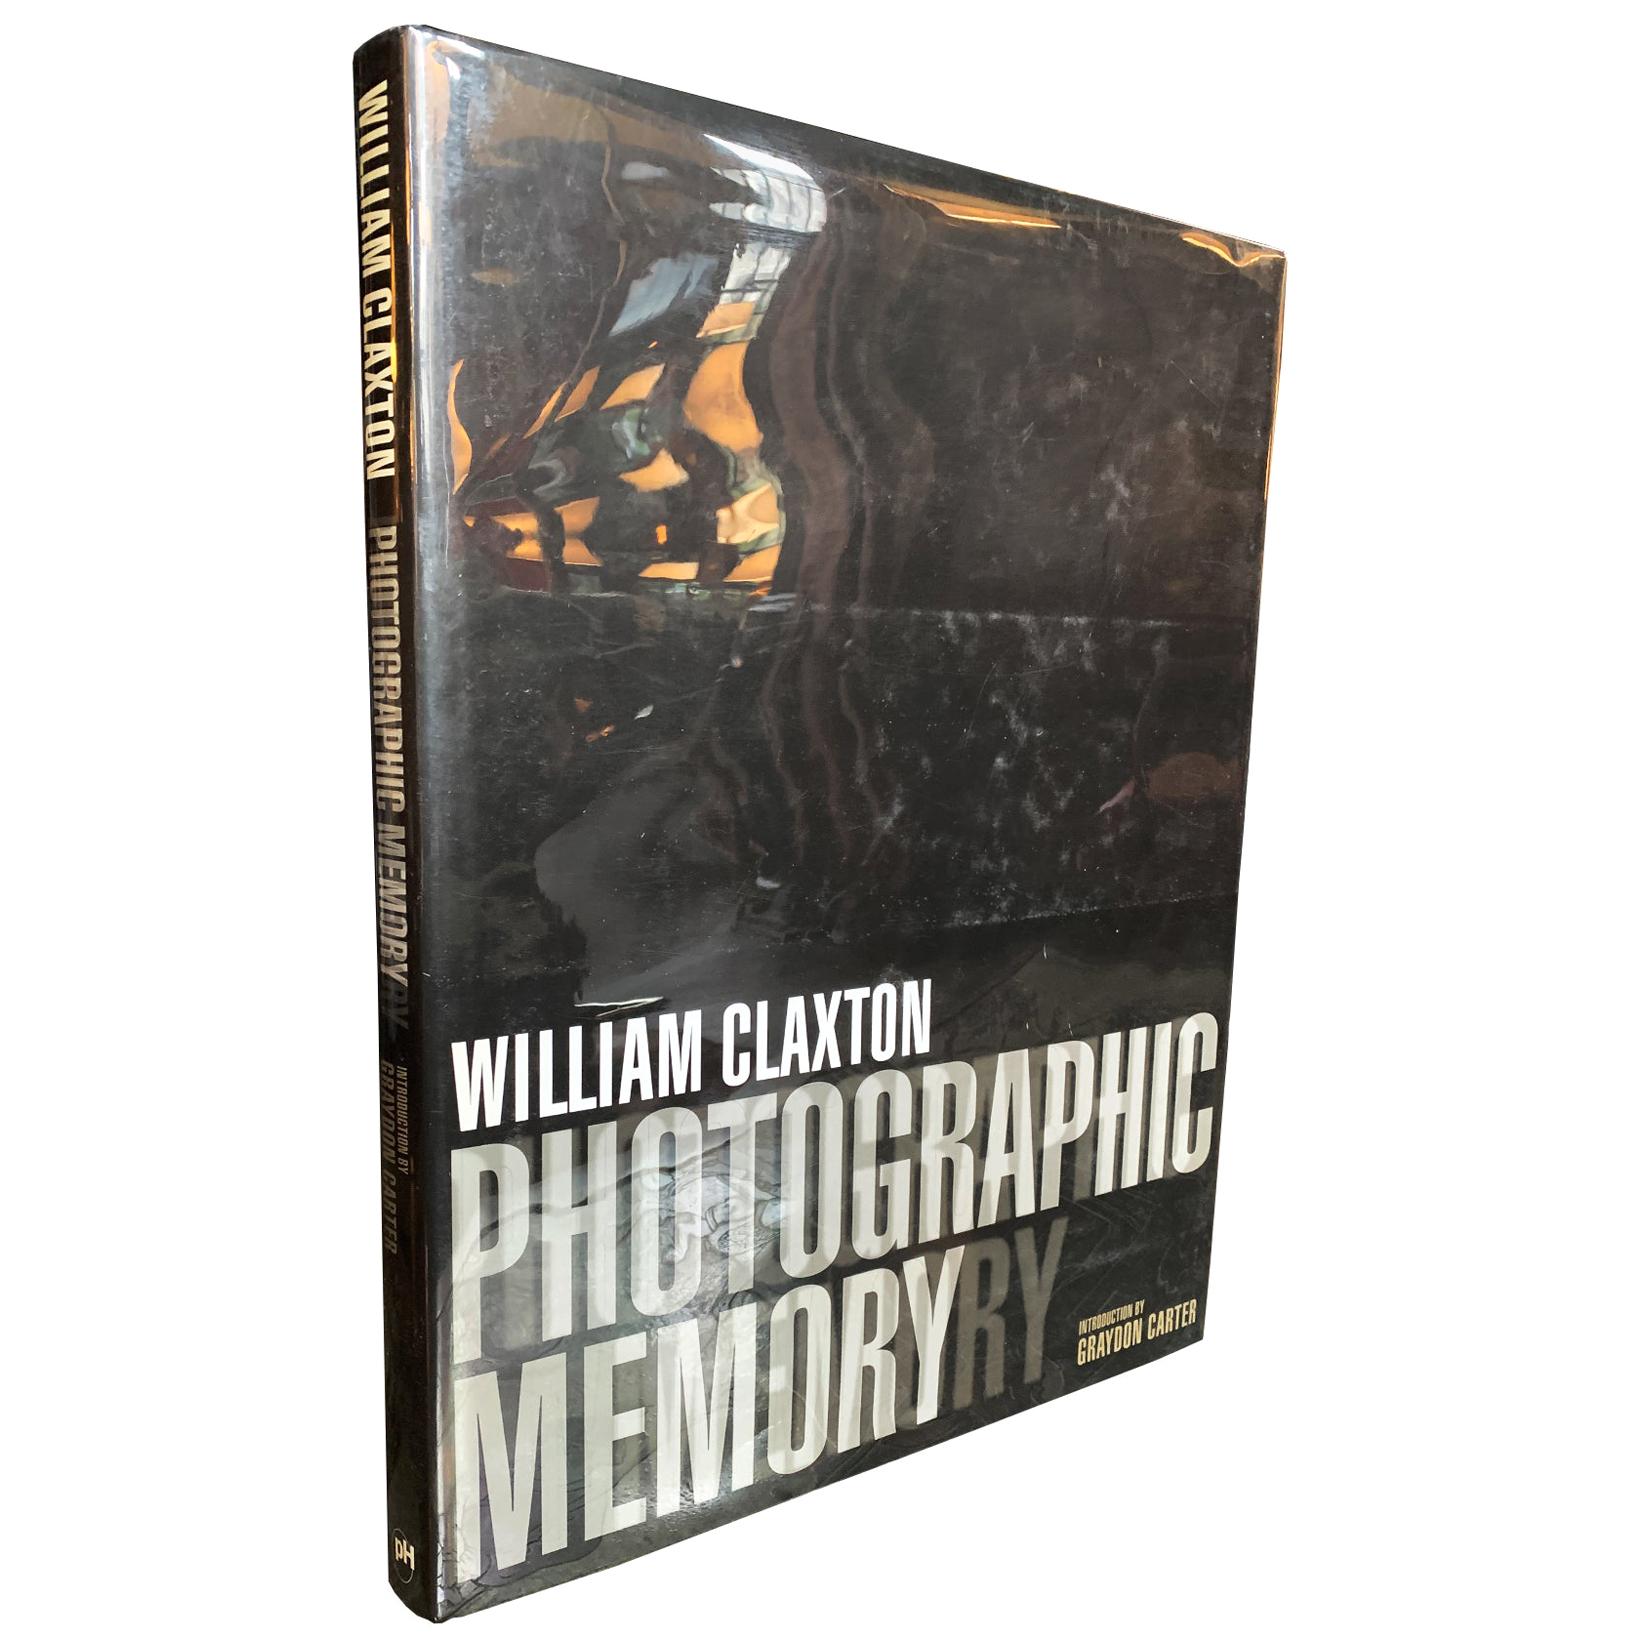 William Claxton Photography Monograph, "Photographic Memory"